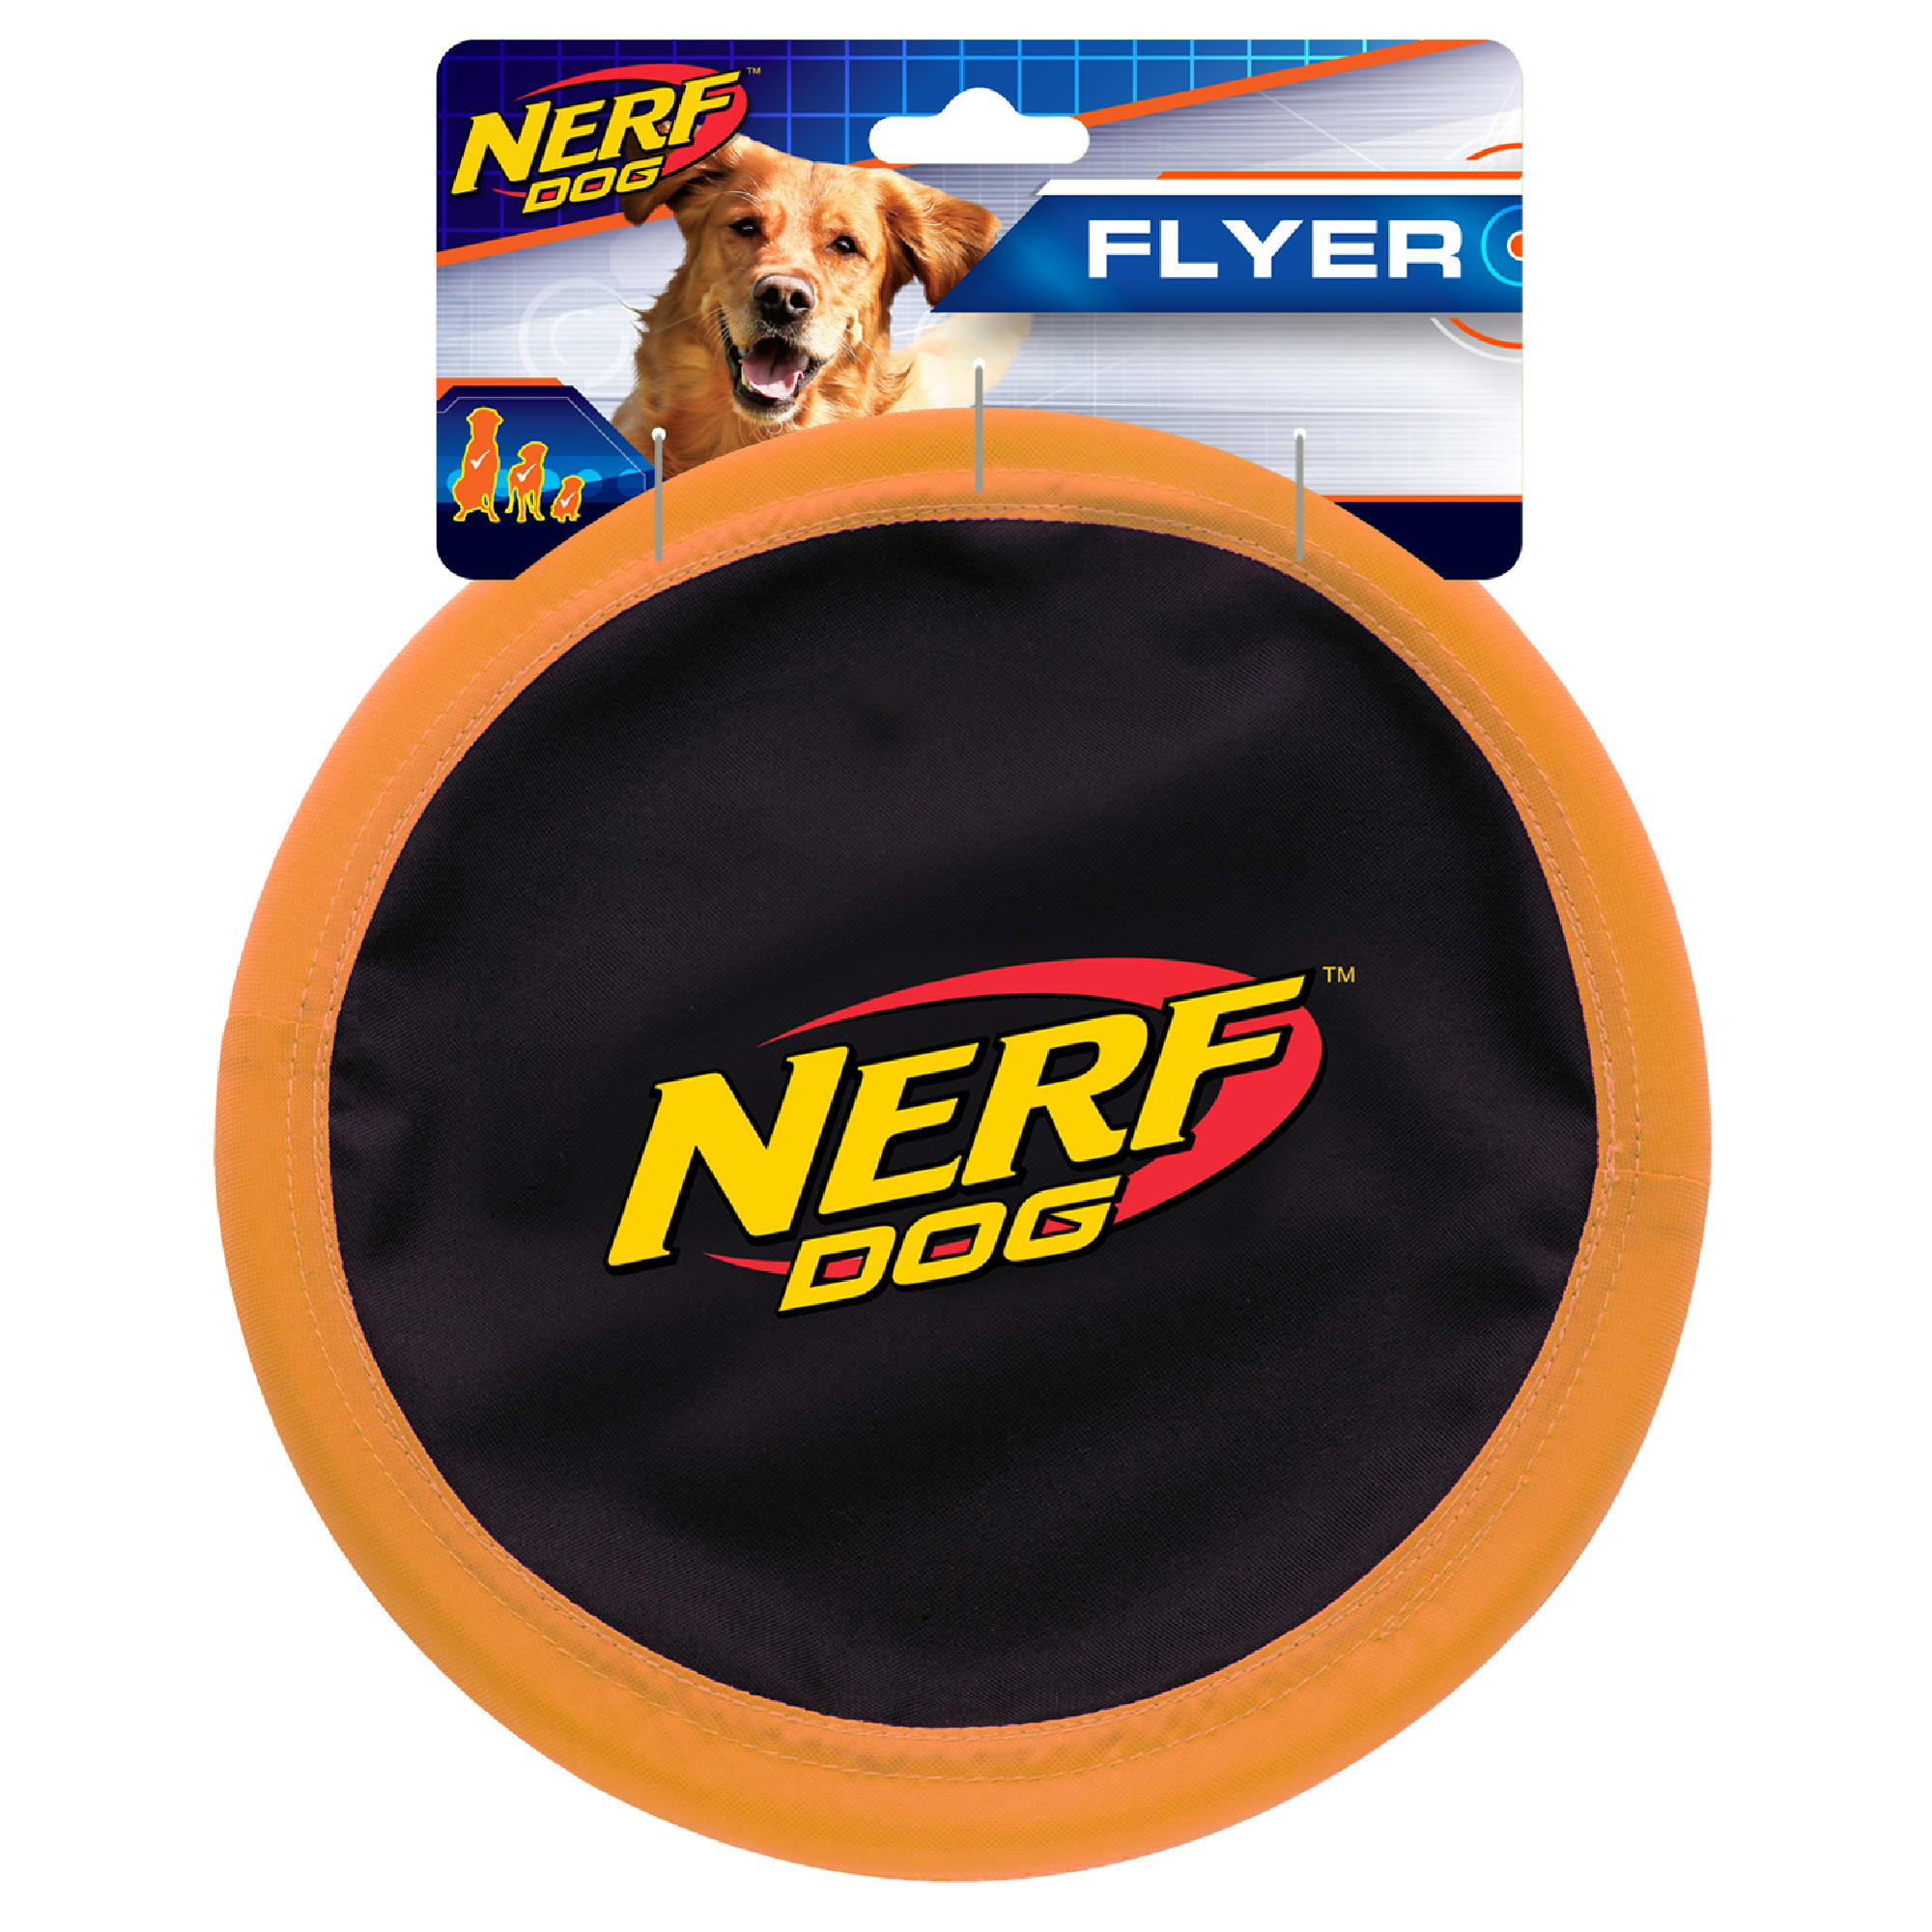 killing Om indstilling Til fods Nerf Nylon Zone Flyer Dog Toy, Medium | Petco